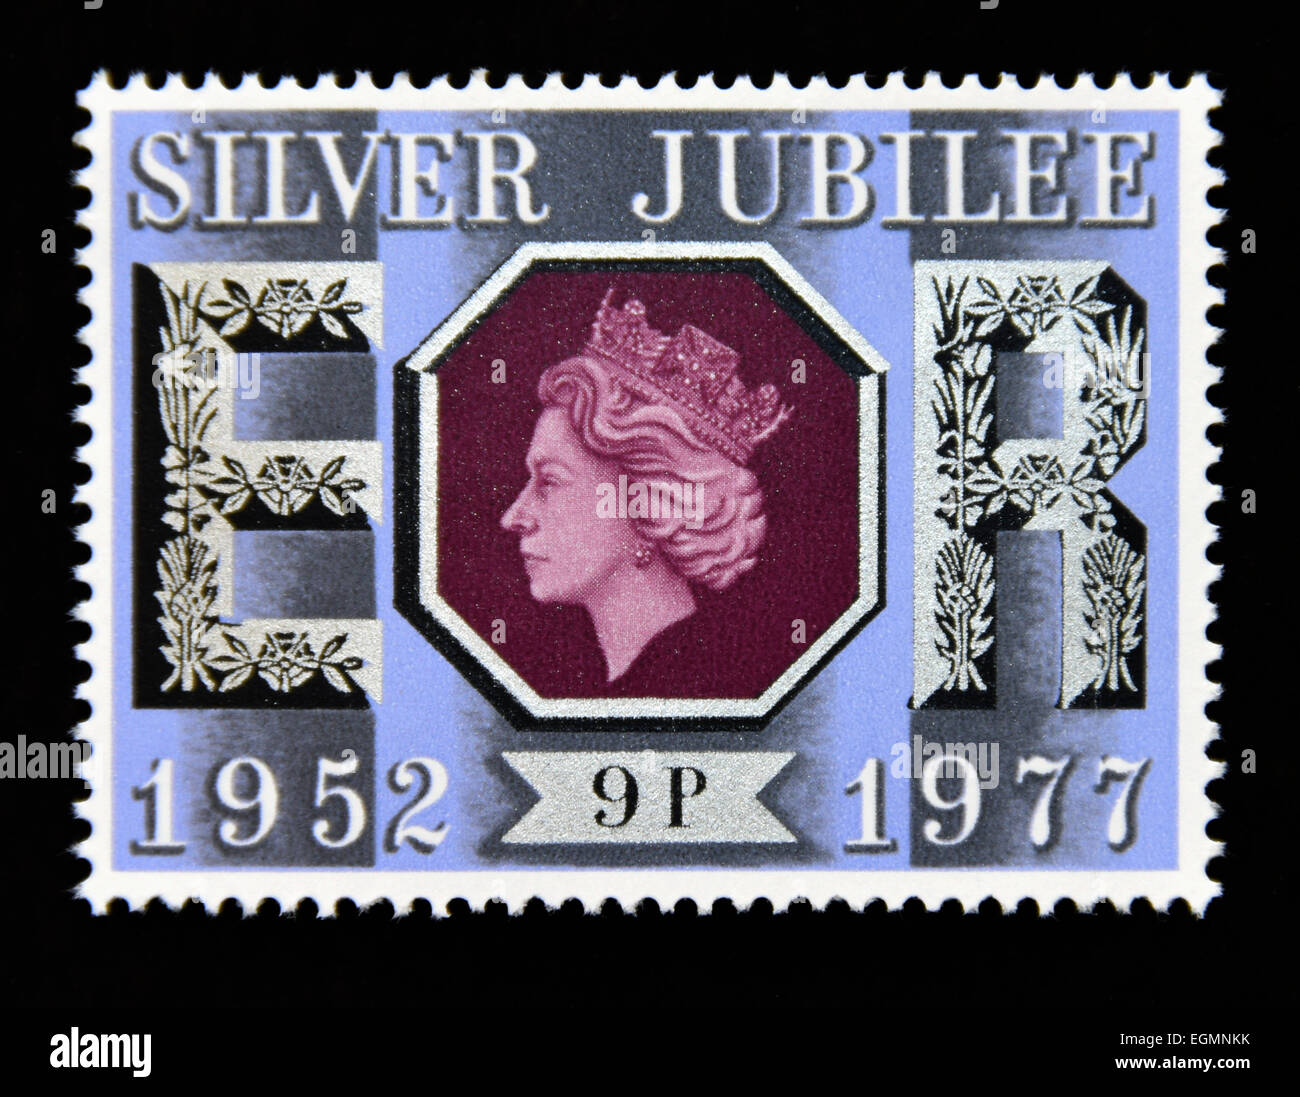 Postage stamp. Great Britain. Queen Elizabeth II. 1977. Silver Jubillee 1952-1977. 9p. Stock Photo